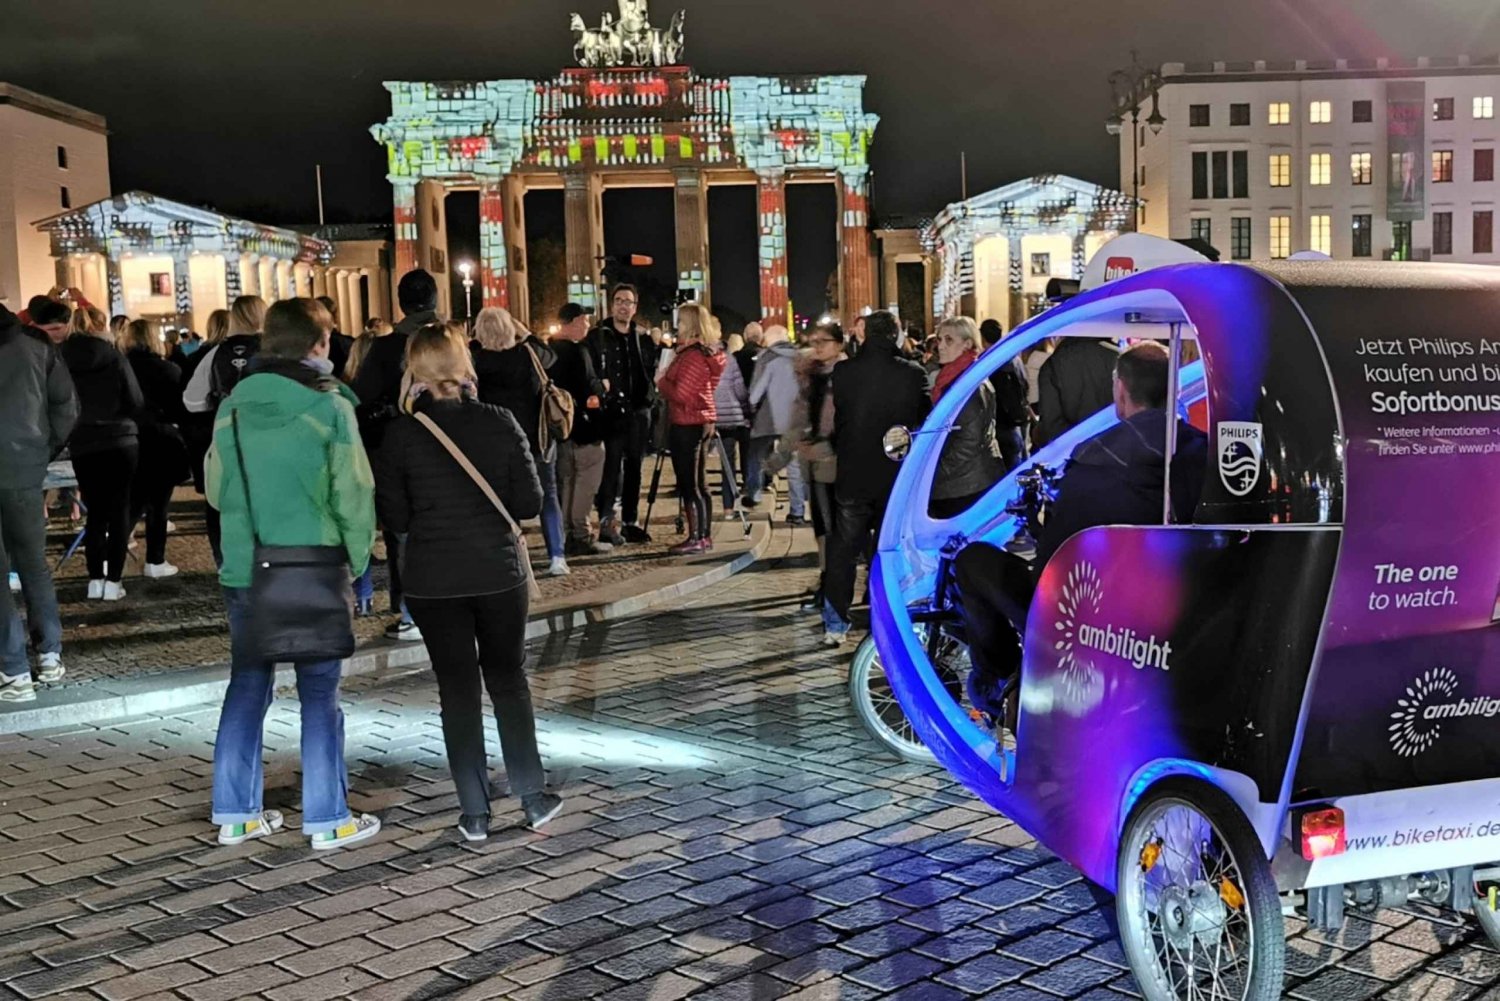 Berlino: Berlino illuminata da Lit-up Bike Taxi